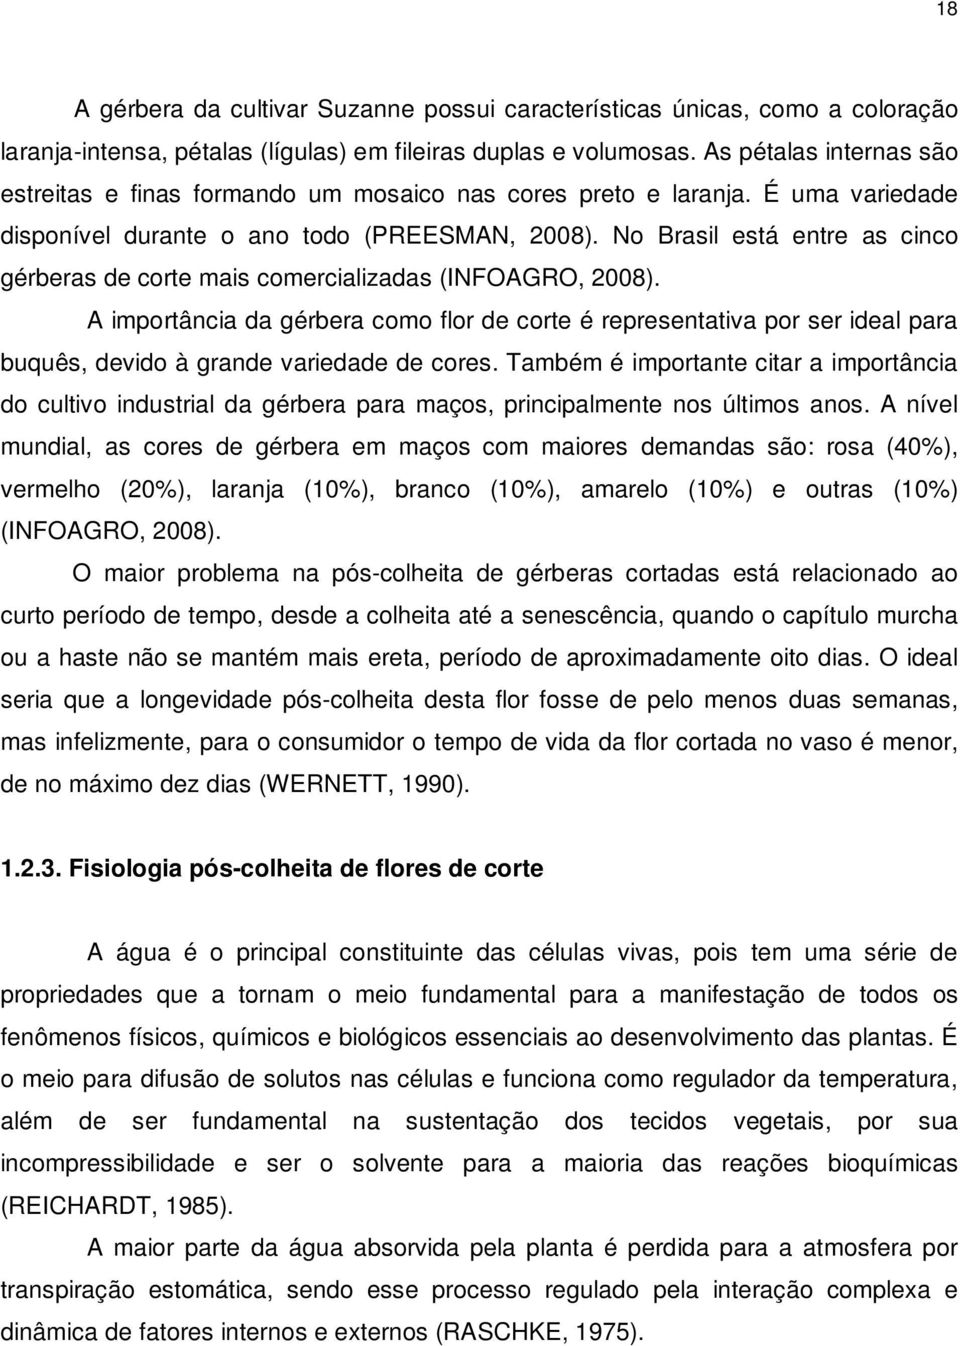 No Brasil está entre as cinco gérberas de corte mais comercializadas (INFOAGRO, 2008).